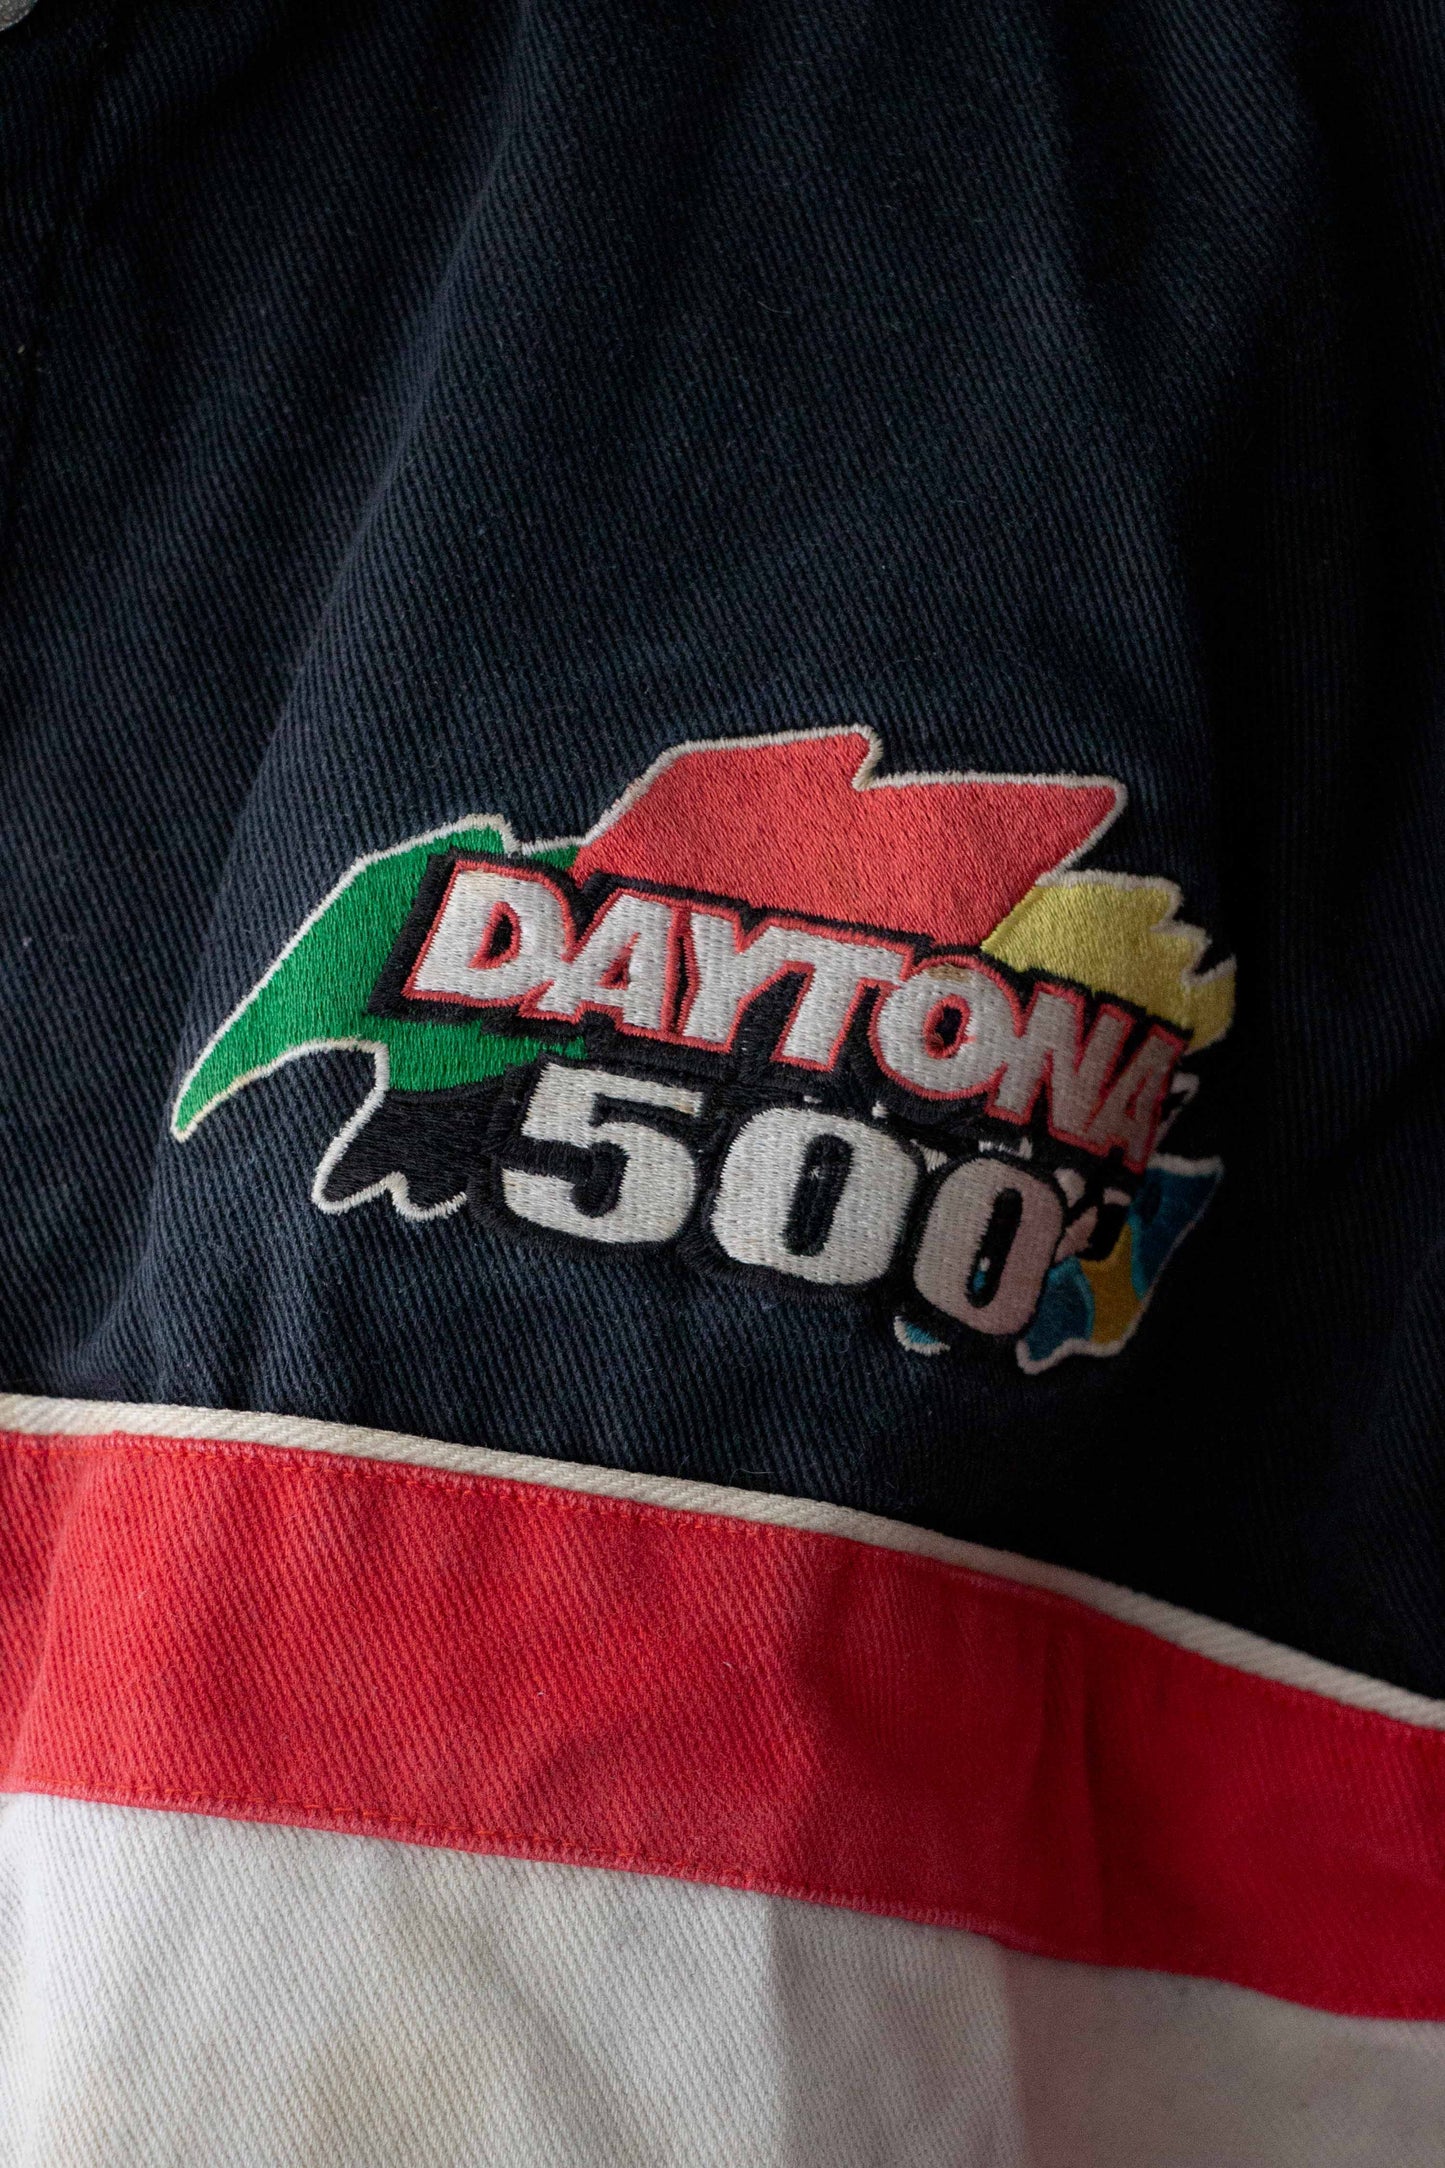 Veste Daytona 500 Nascar 2000